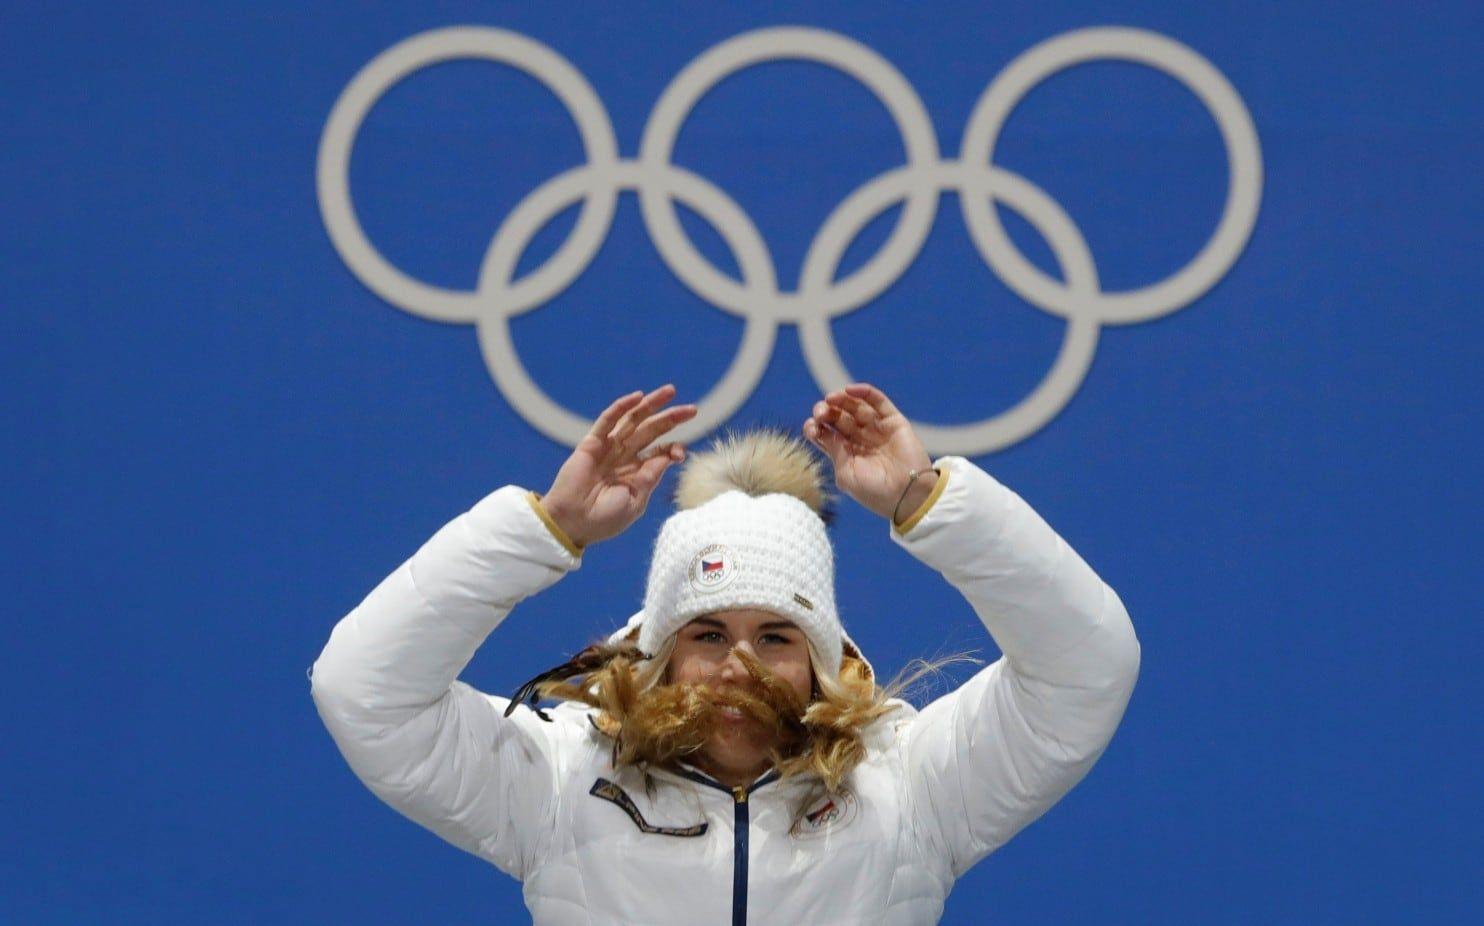 The Olympics have waited 114 years for Ester Ledecka